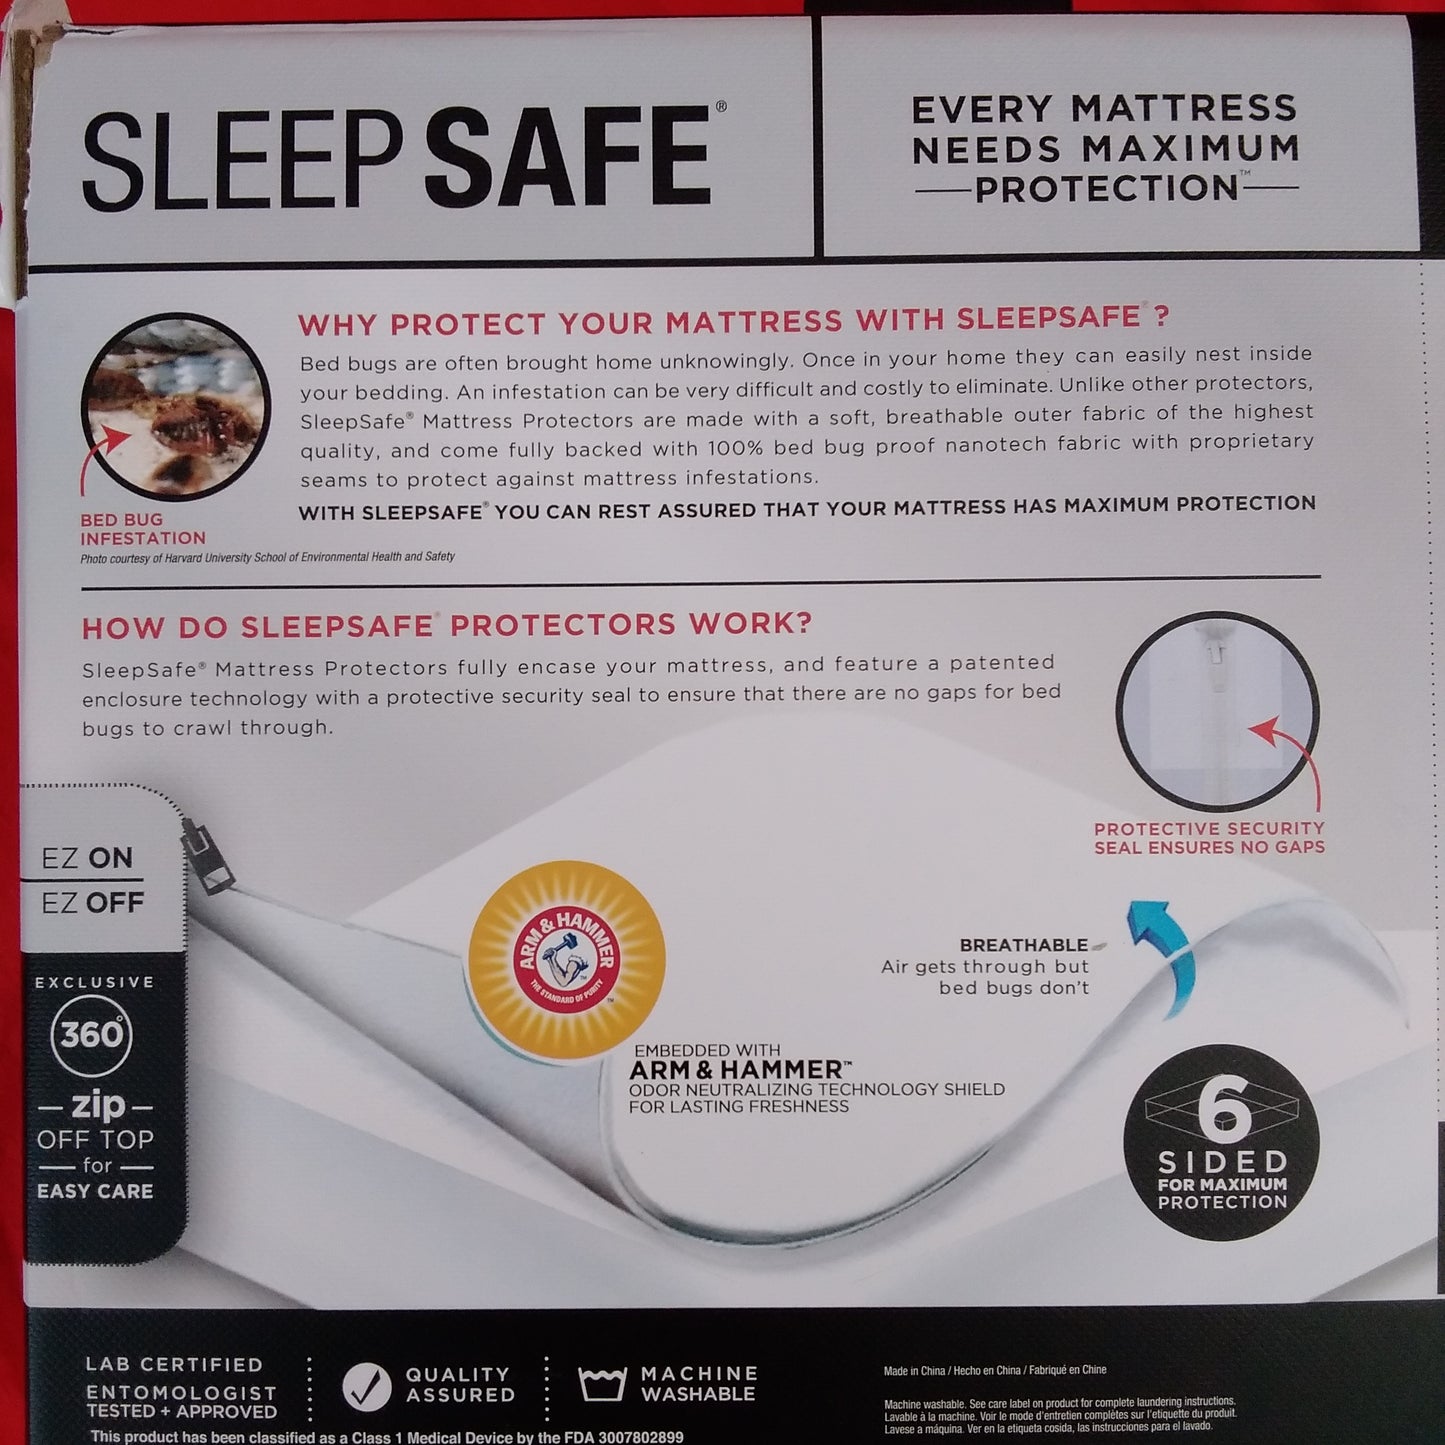 NIB - Sleep Safe Ultra Ultimate Mattress Protector - Twin - 39”x75”